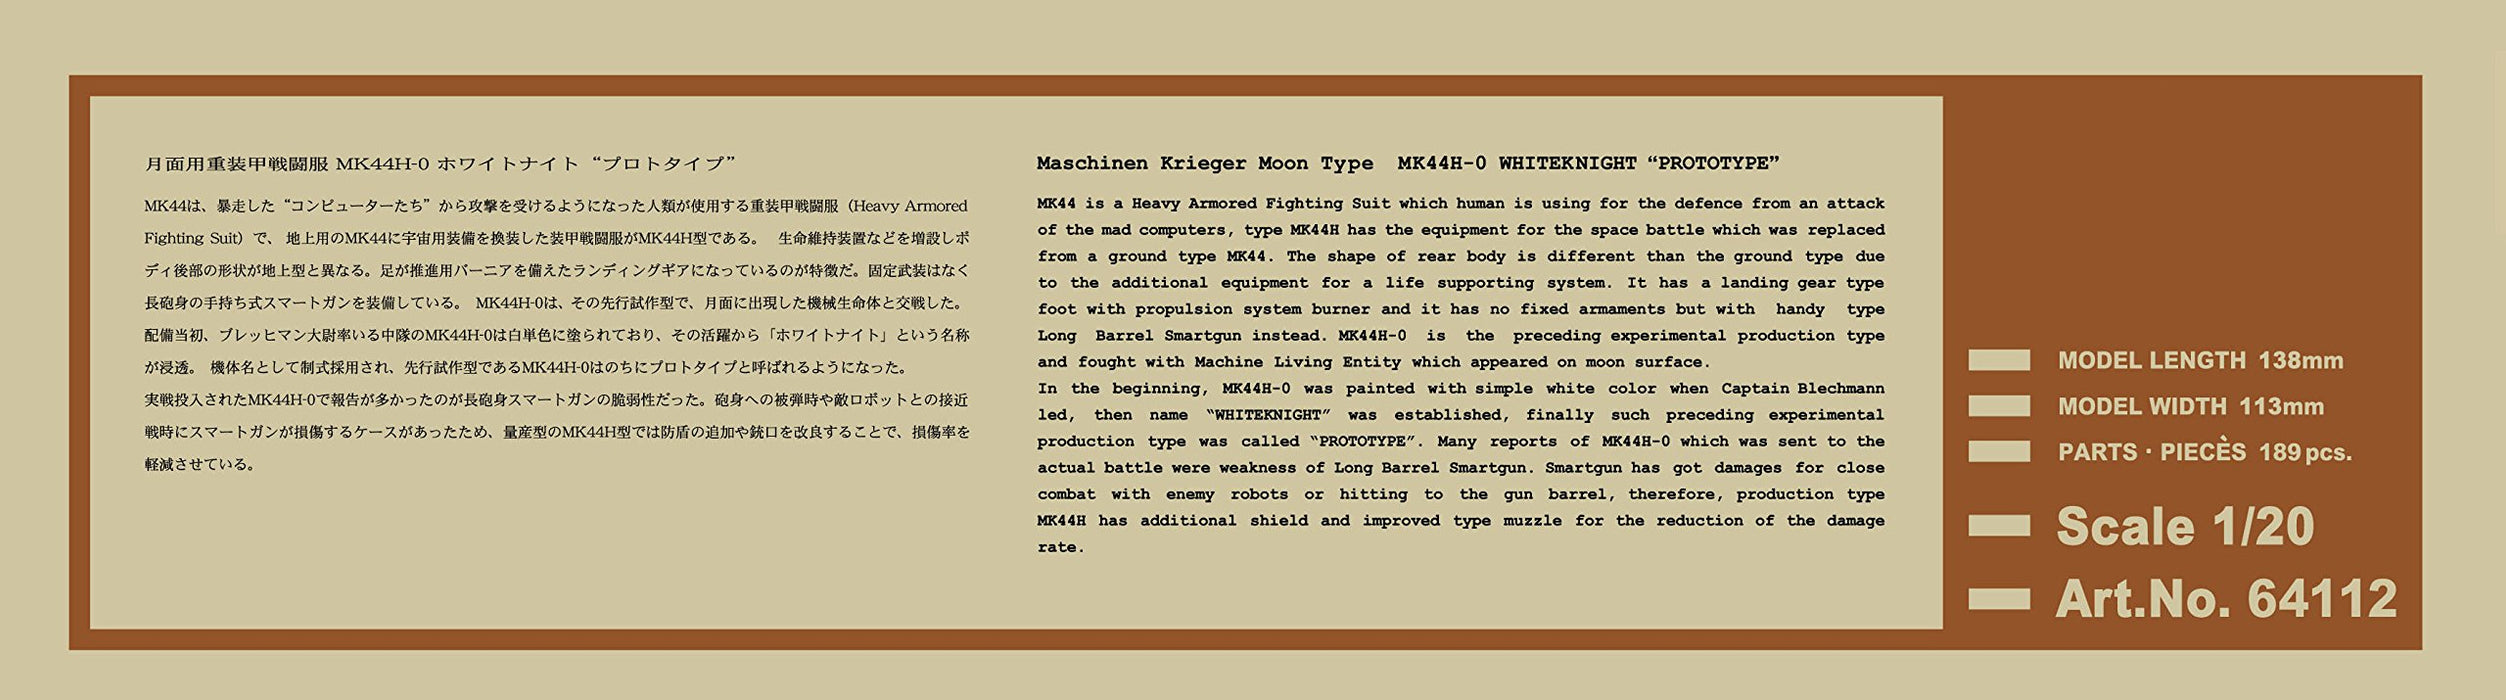 Hasegawa MK44H-0 Maschinen Krieger Moon Type Whiteknight 1/20 scale kit HA64112_8